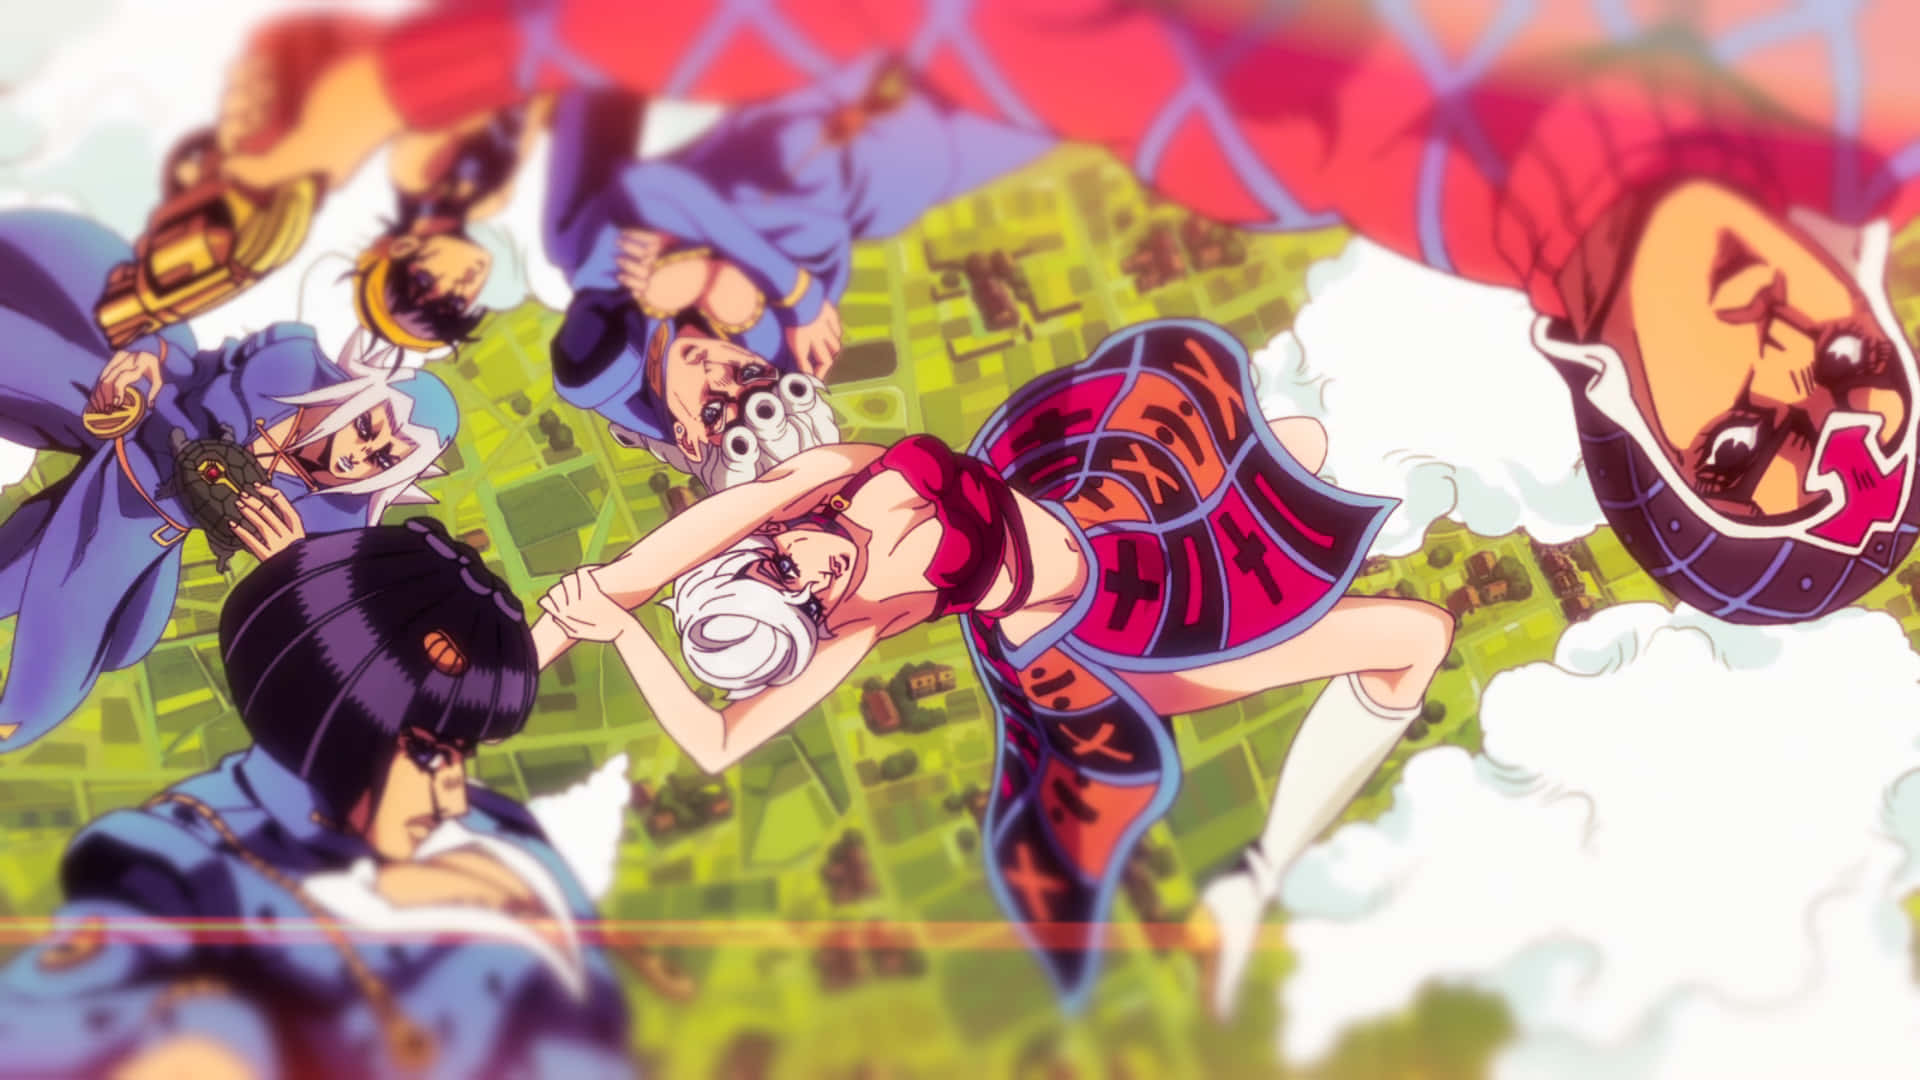 Vento Aureo Anime Cast in Action Wallpaper